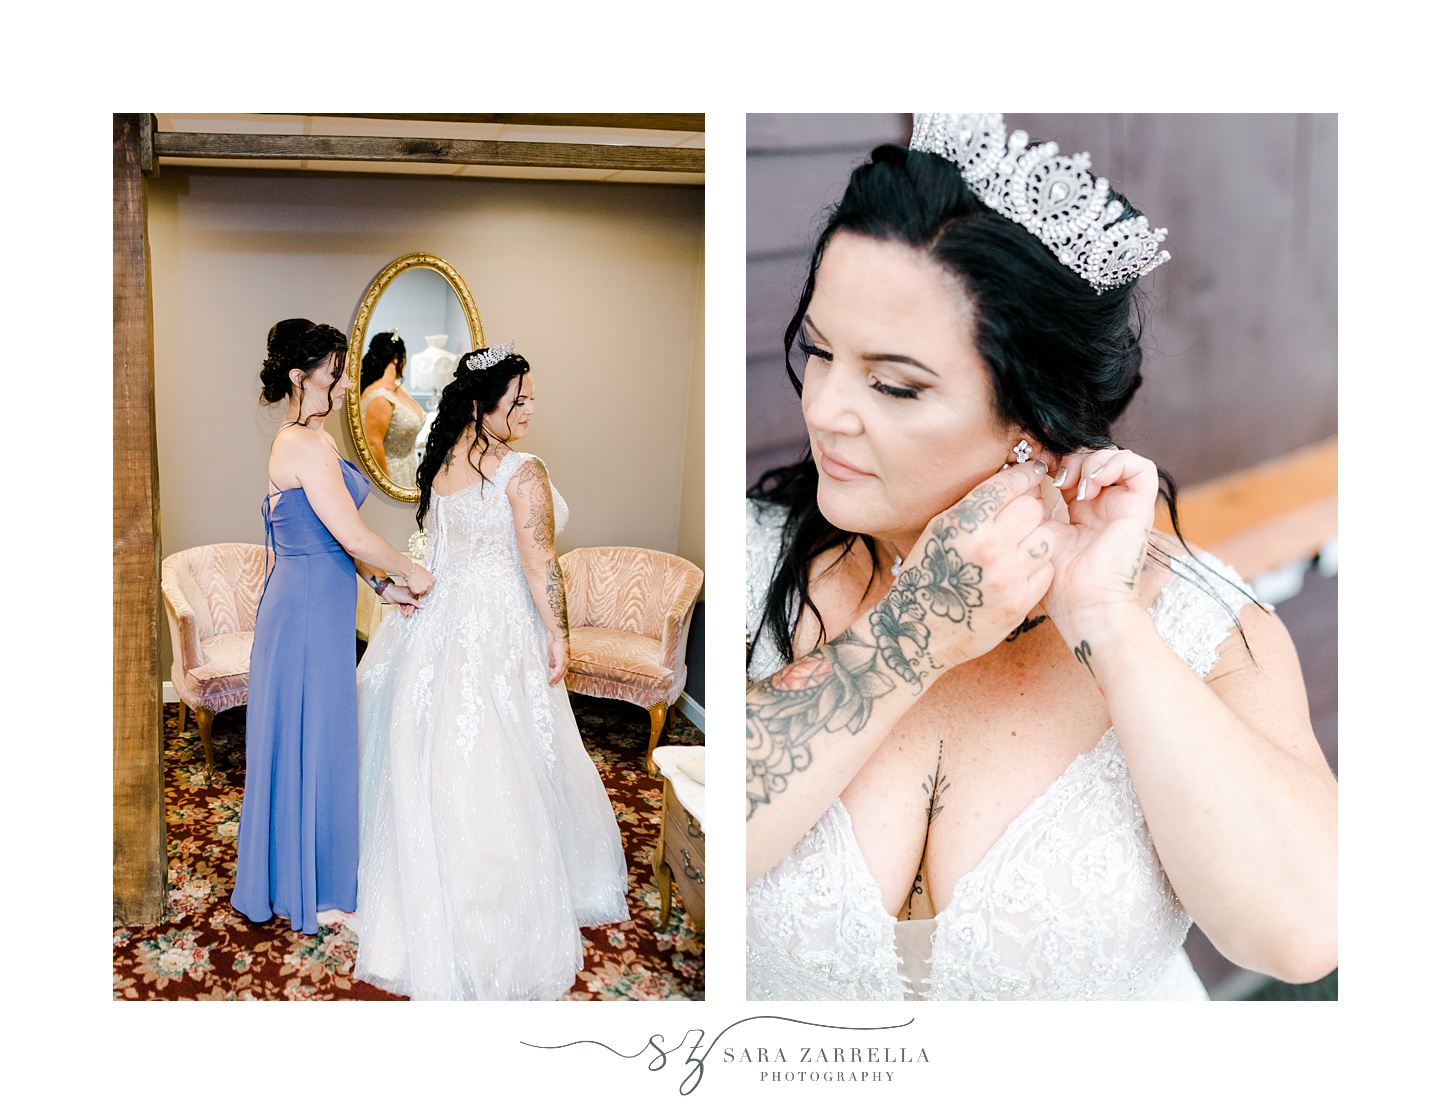 bridesmaids help bride into wedding dress and crown 